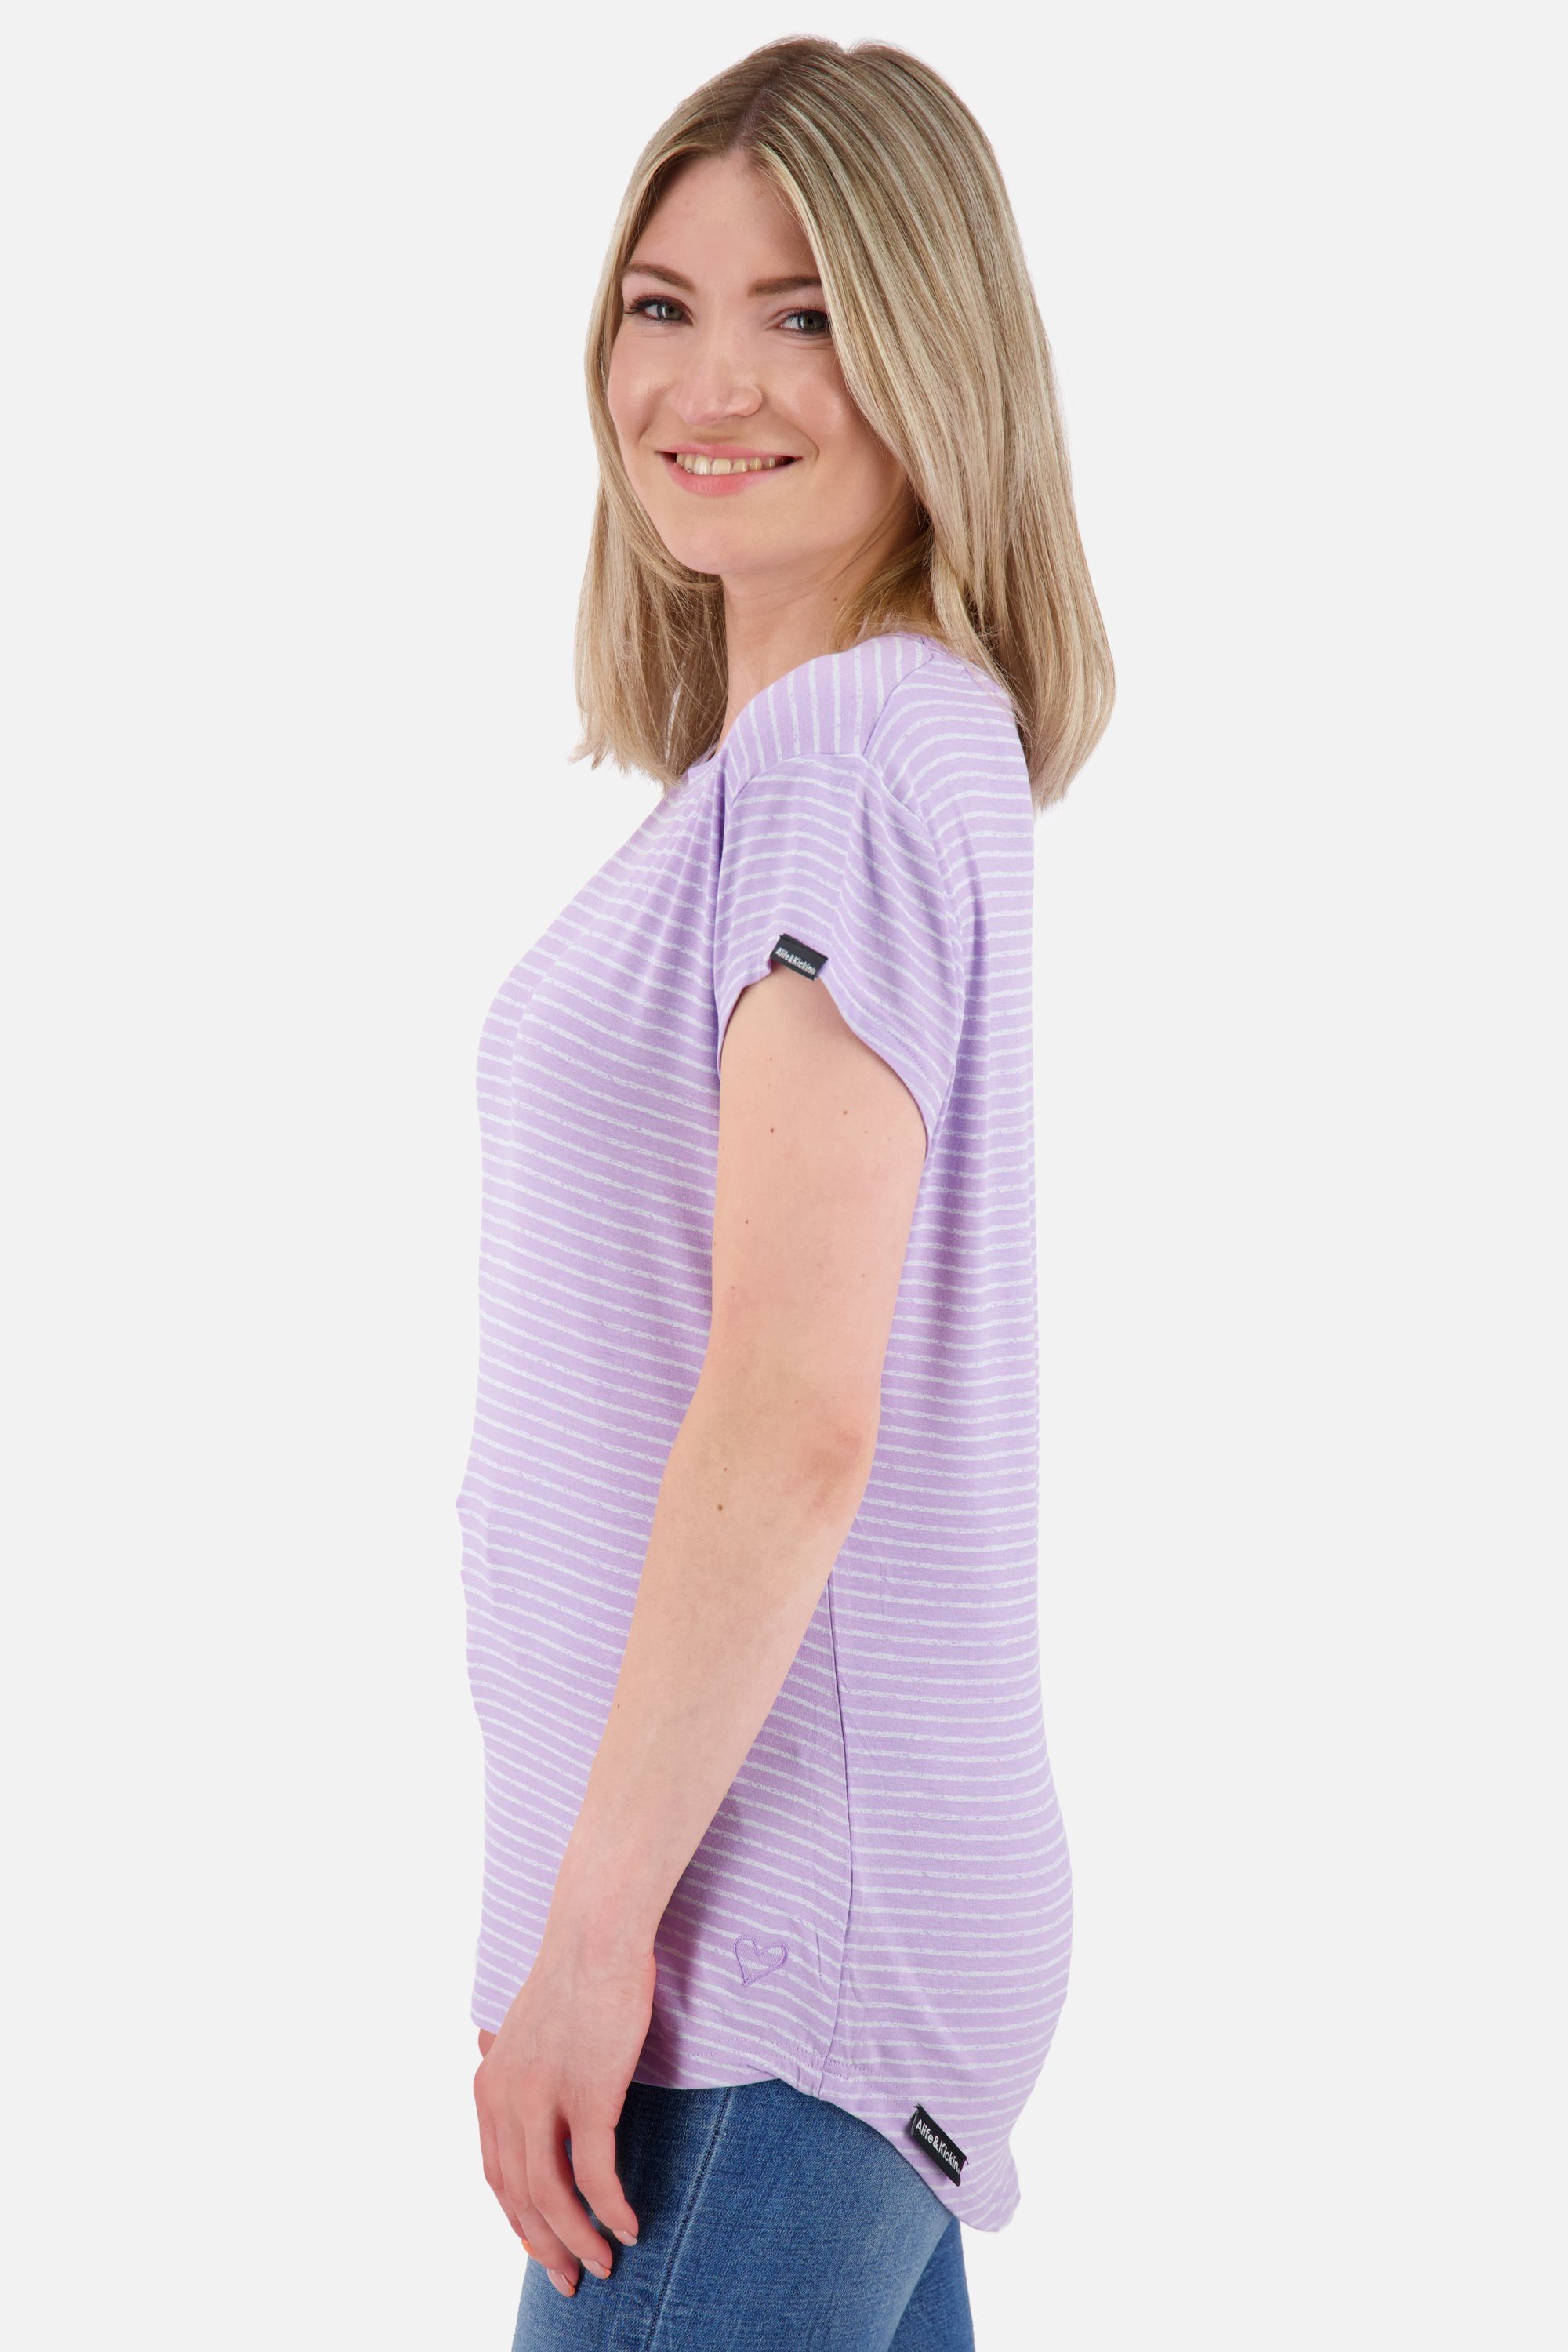 Alife & Shirt Z Shirt lavender digital Rundhalsshirt Kurzarmshirt, Damen Kickin MimmyAK